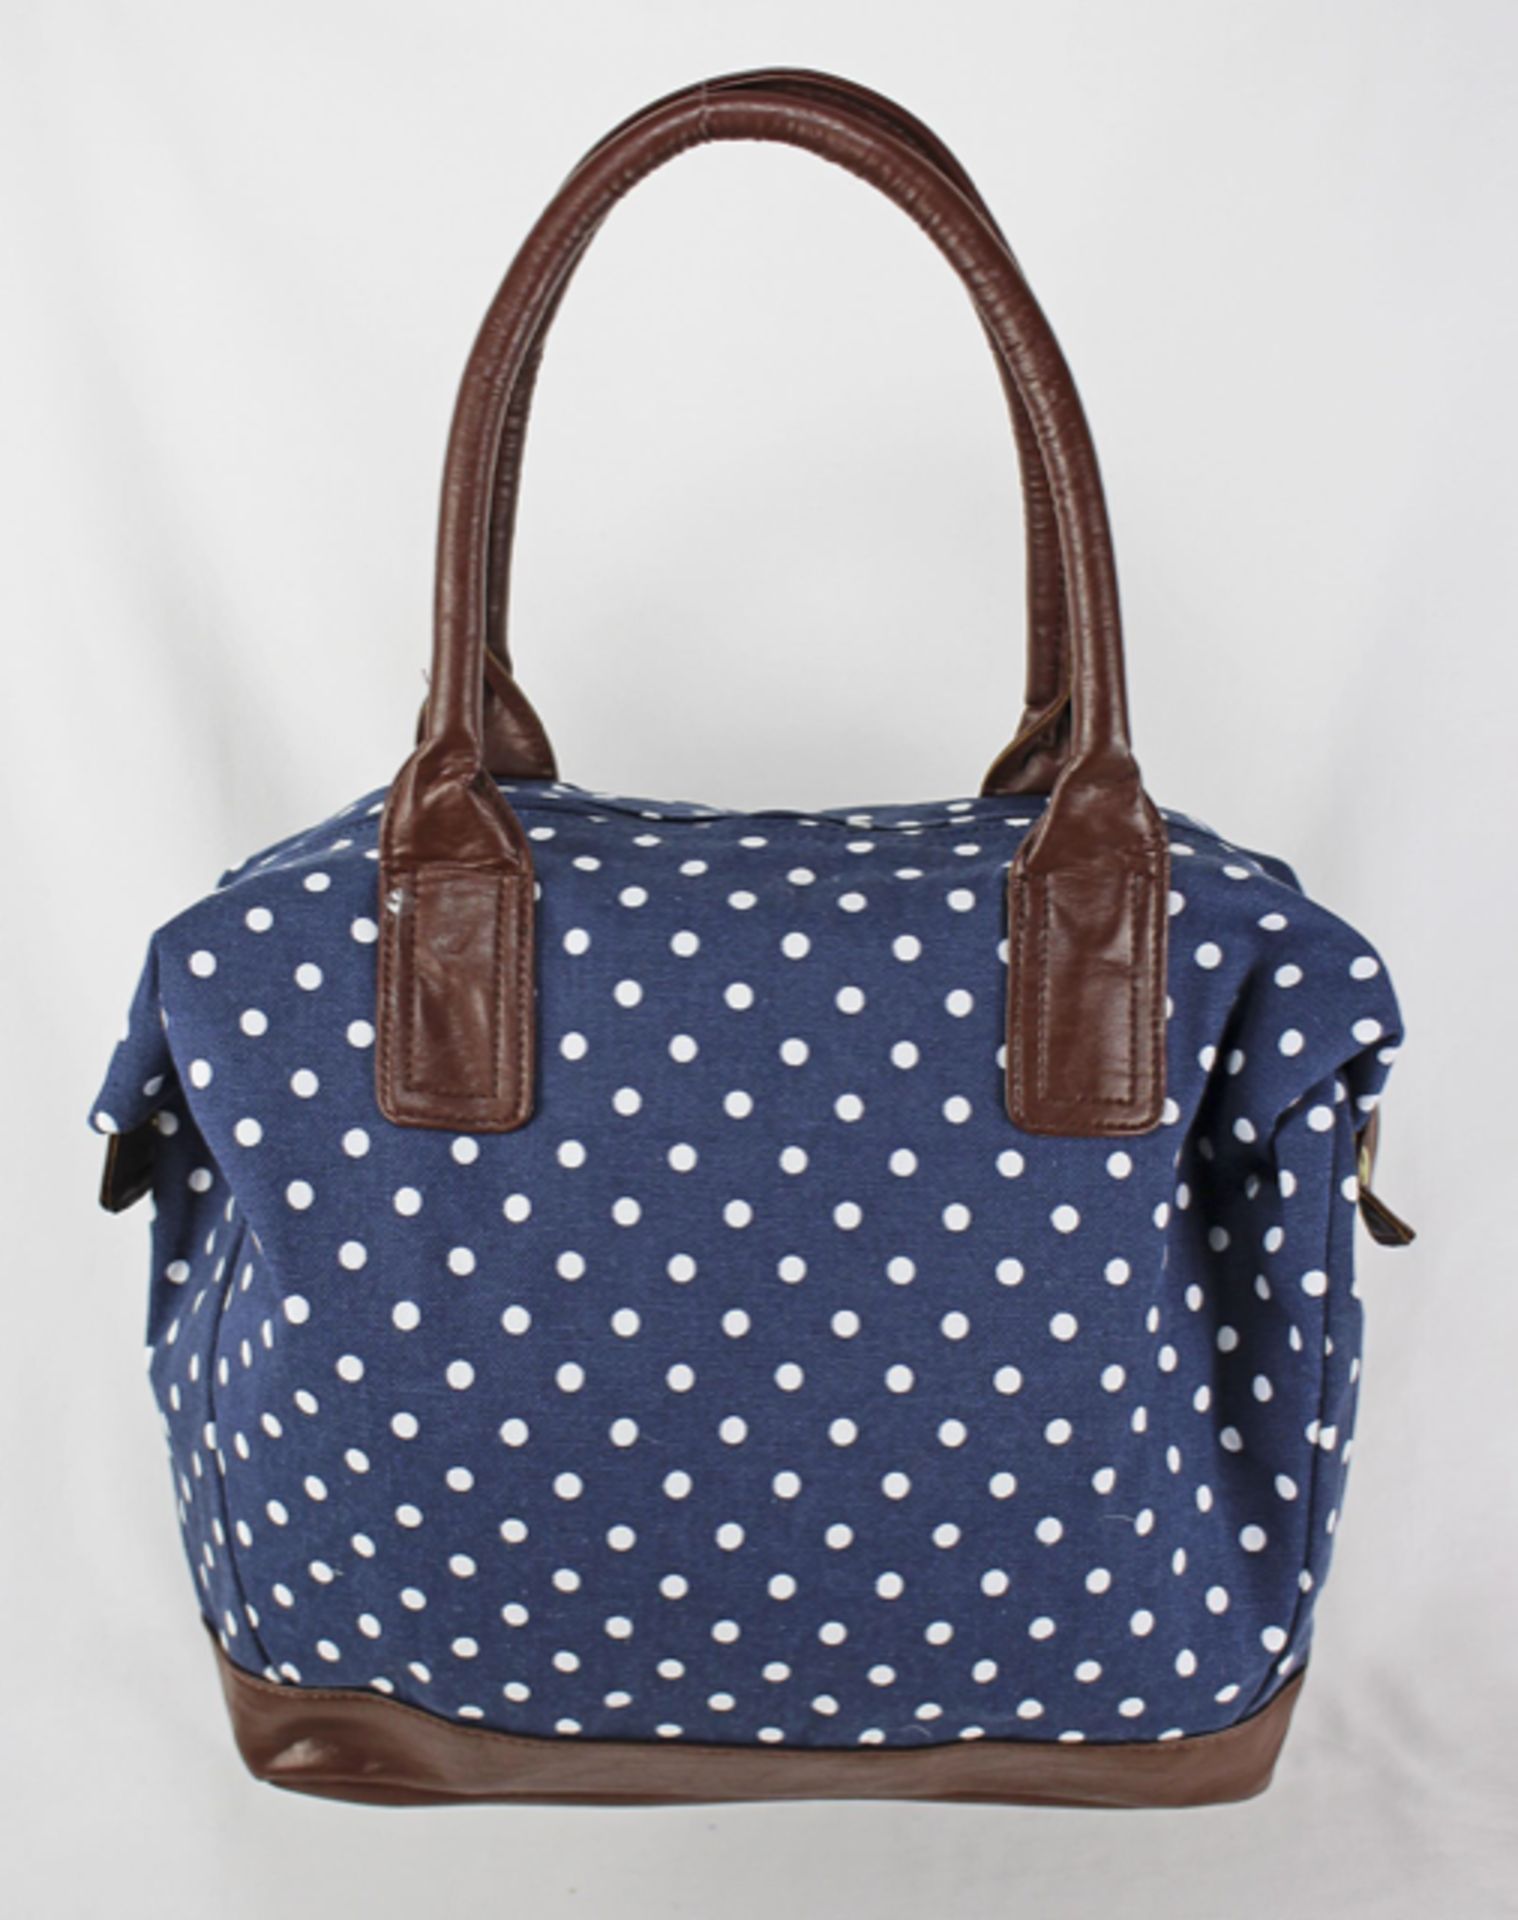 V Brand New Elizabeth Rose Travel Bag - Ideal For Holidays/Beach etc - Image 2 of 2